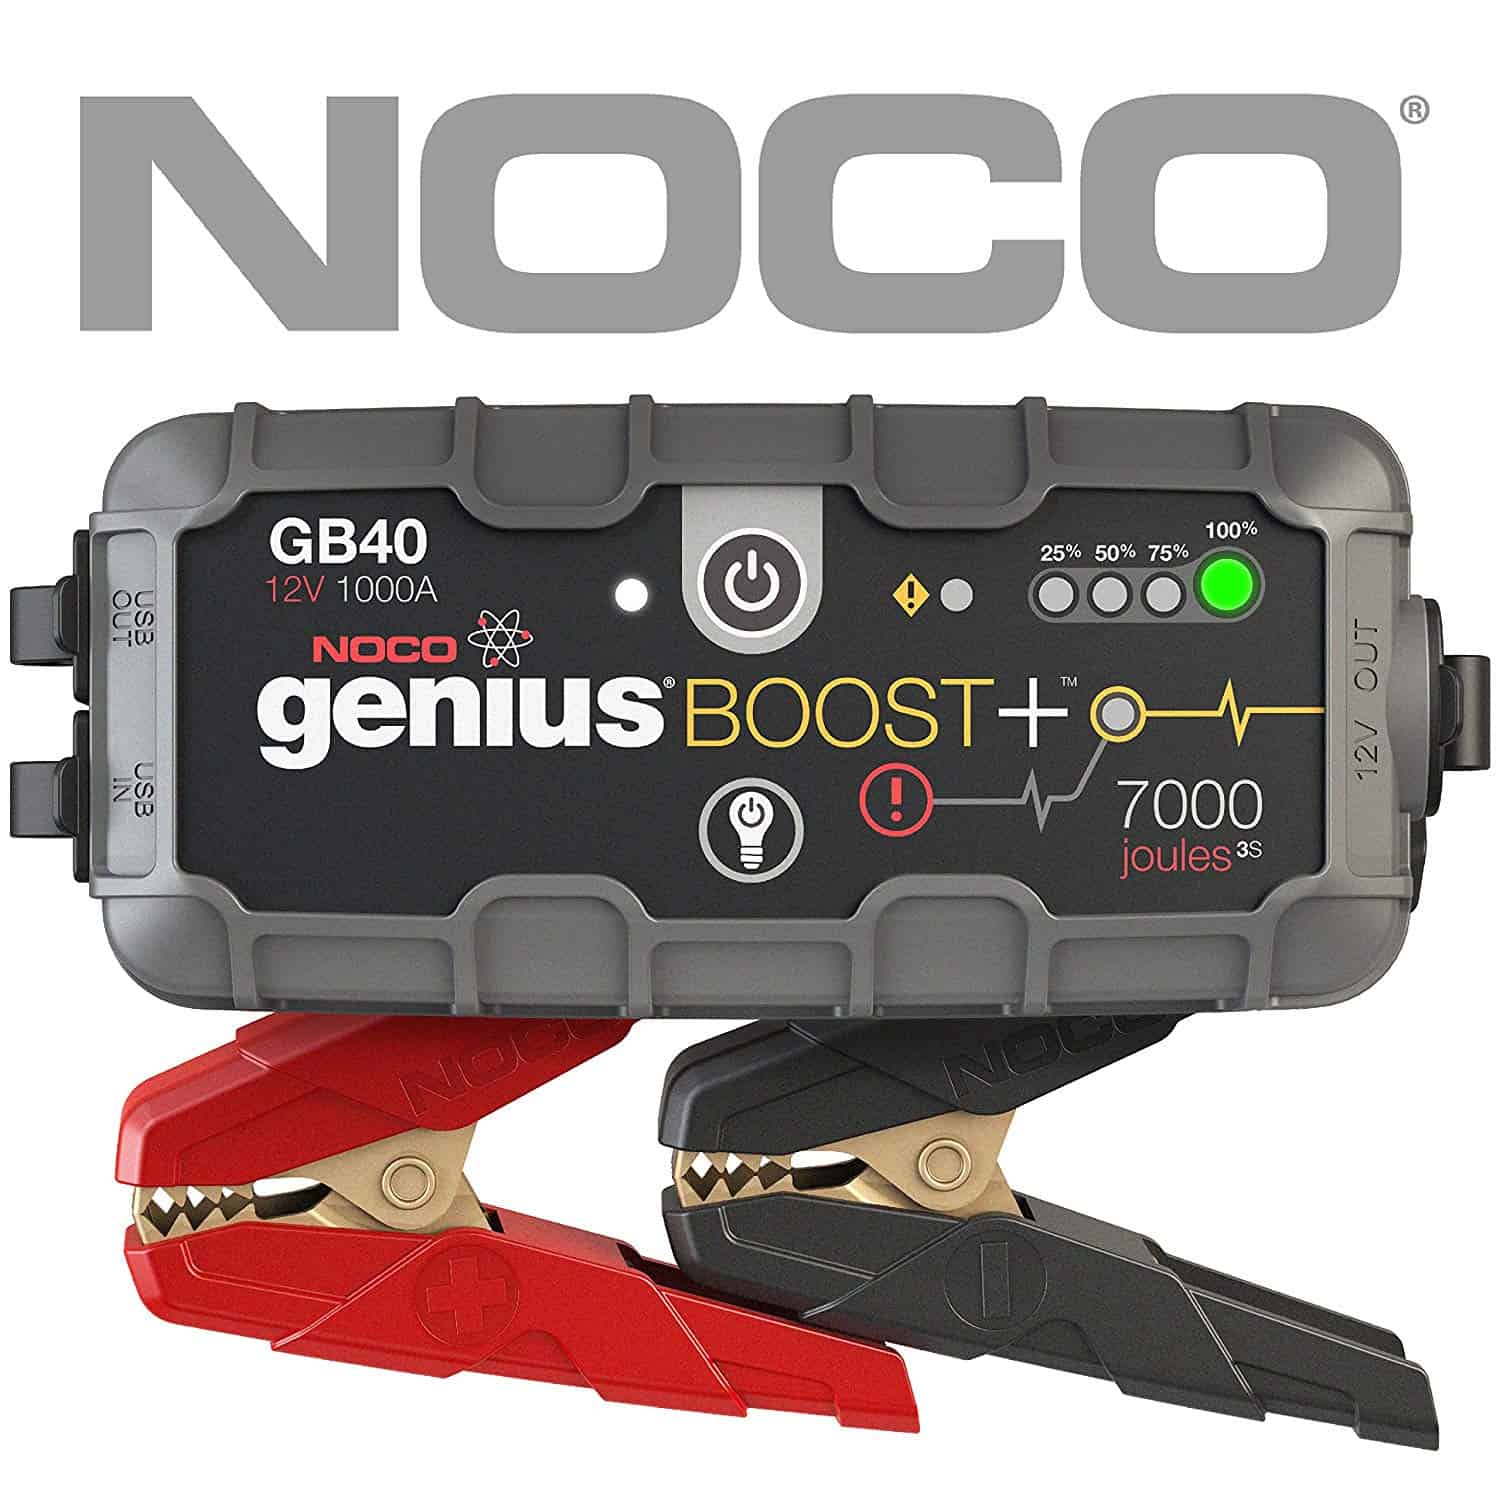 NOCO Genius Boost Plus GB40 1000 Amp 12V UltraSafe Lithium Jump Starter